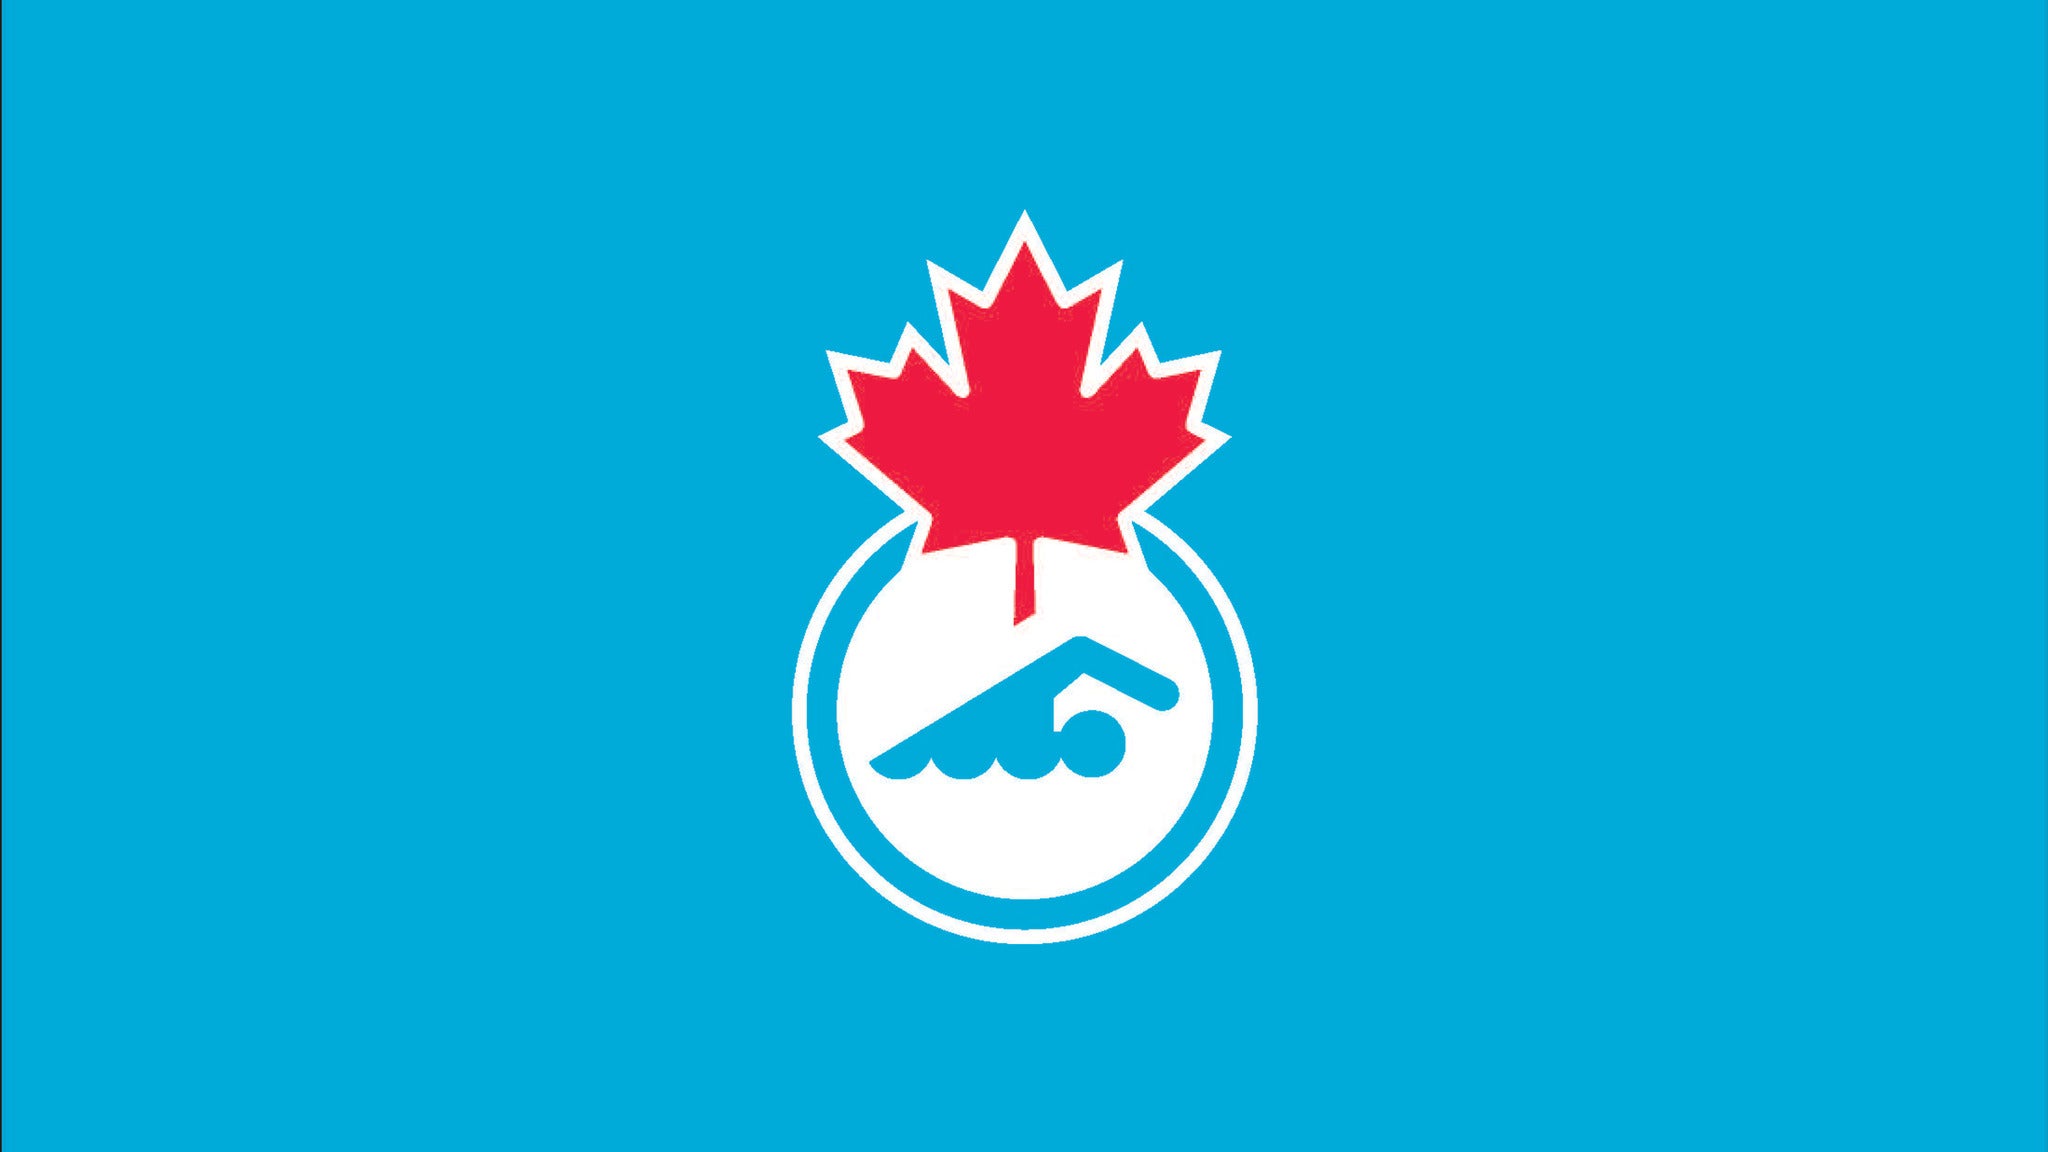 FINA Swimming World Cup - Toronto / Coupe du monde de natation FINA in Toronto promo photo for Special  presale offer code